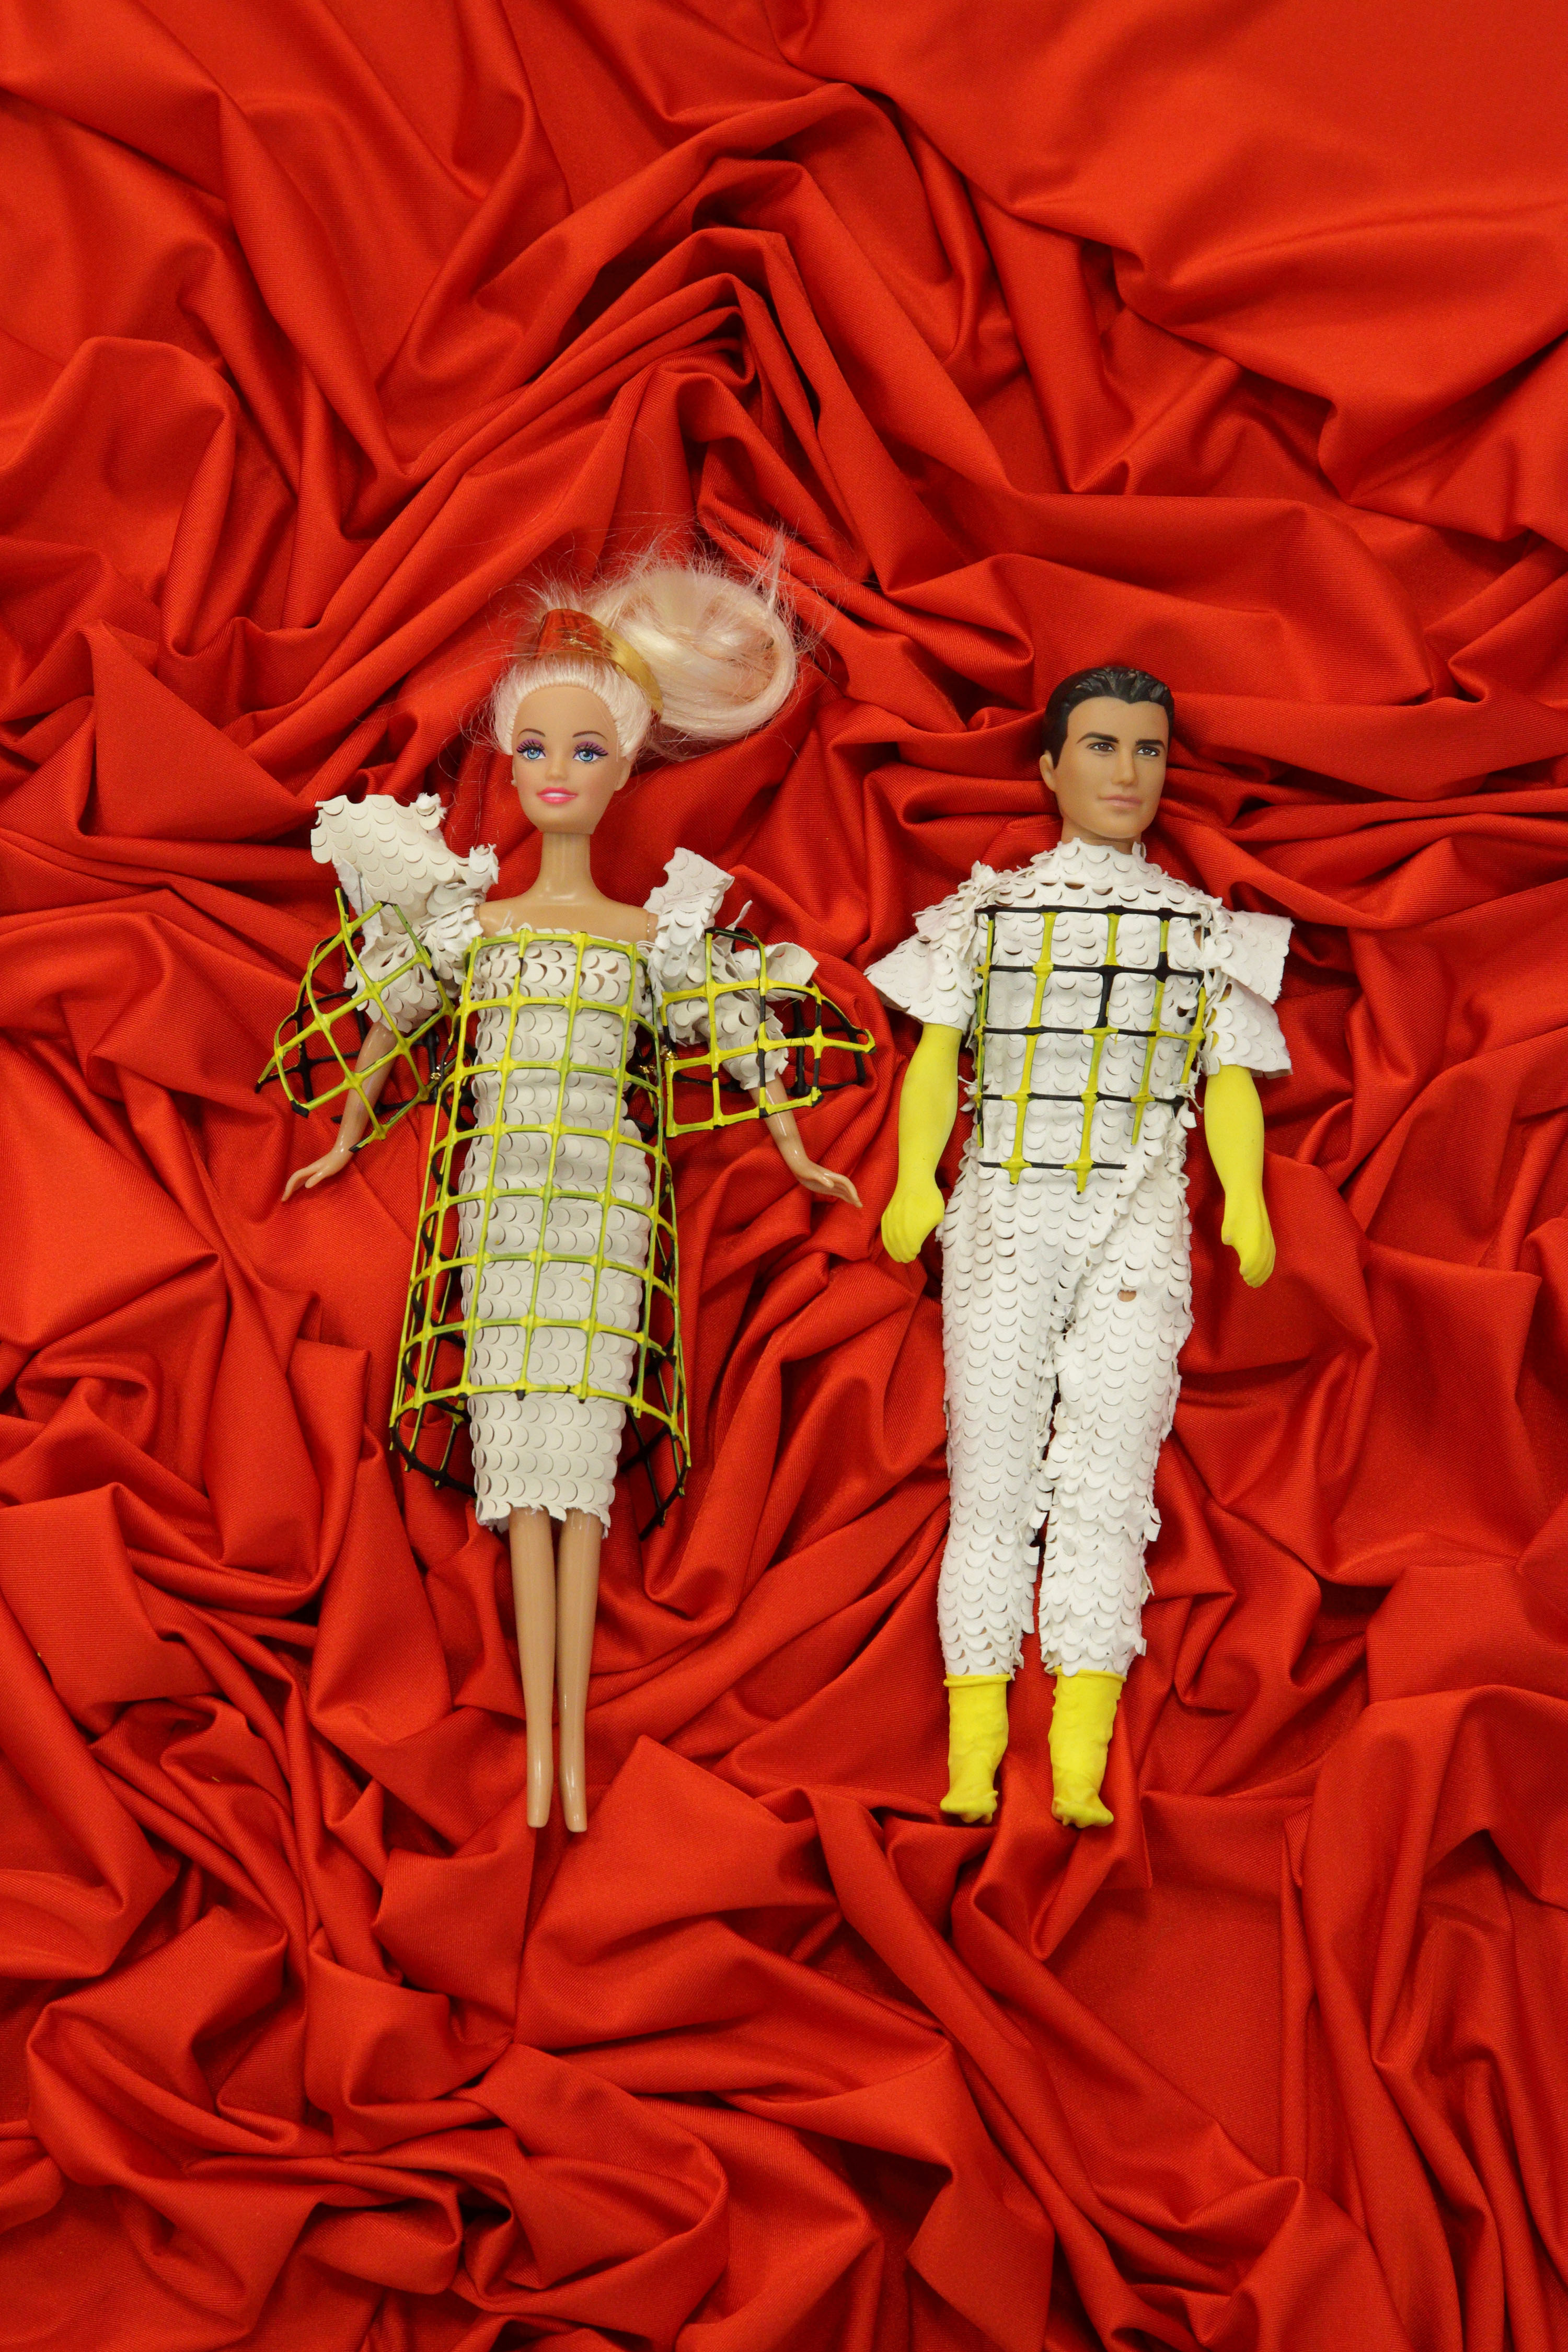 H πριγκίπισσα και το μπιζέλι - μακέτες κοστουμιών Ιωάννας Τσάμη_φωτό Γ. Δομένικος -2